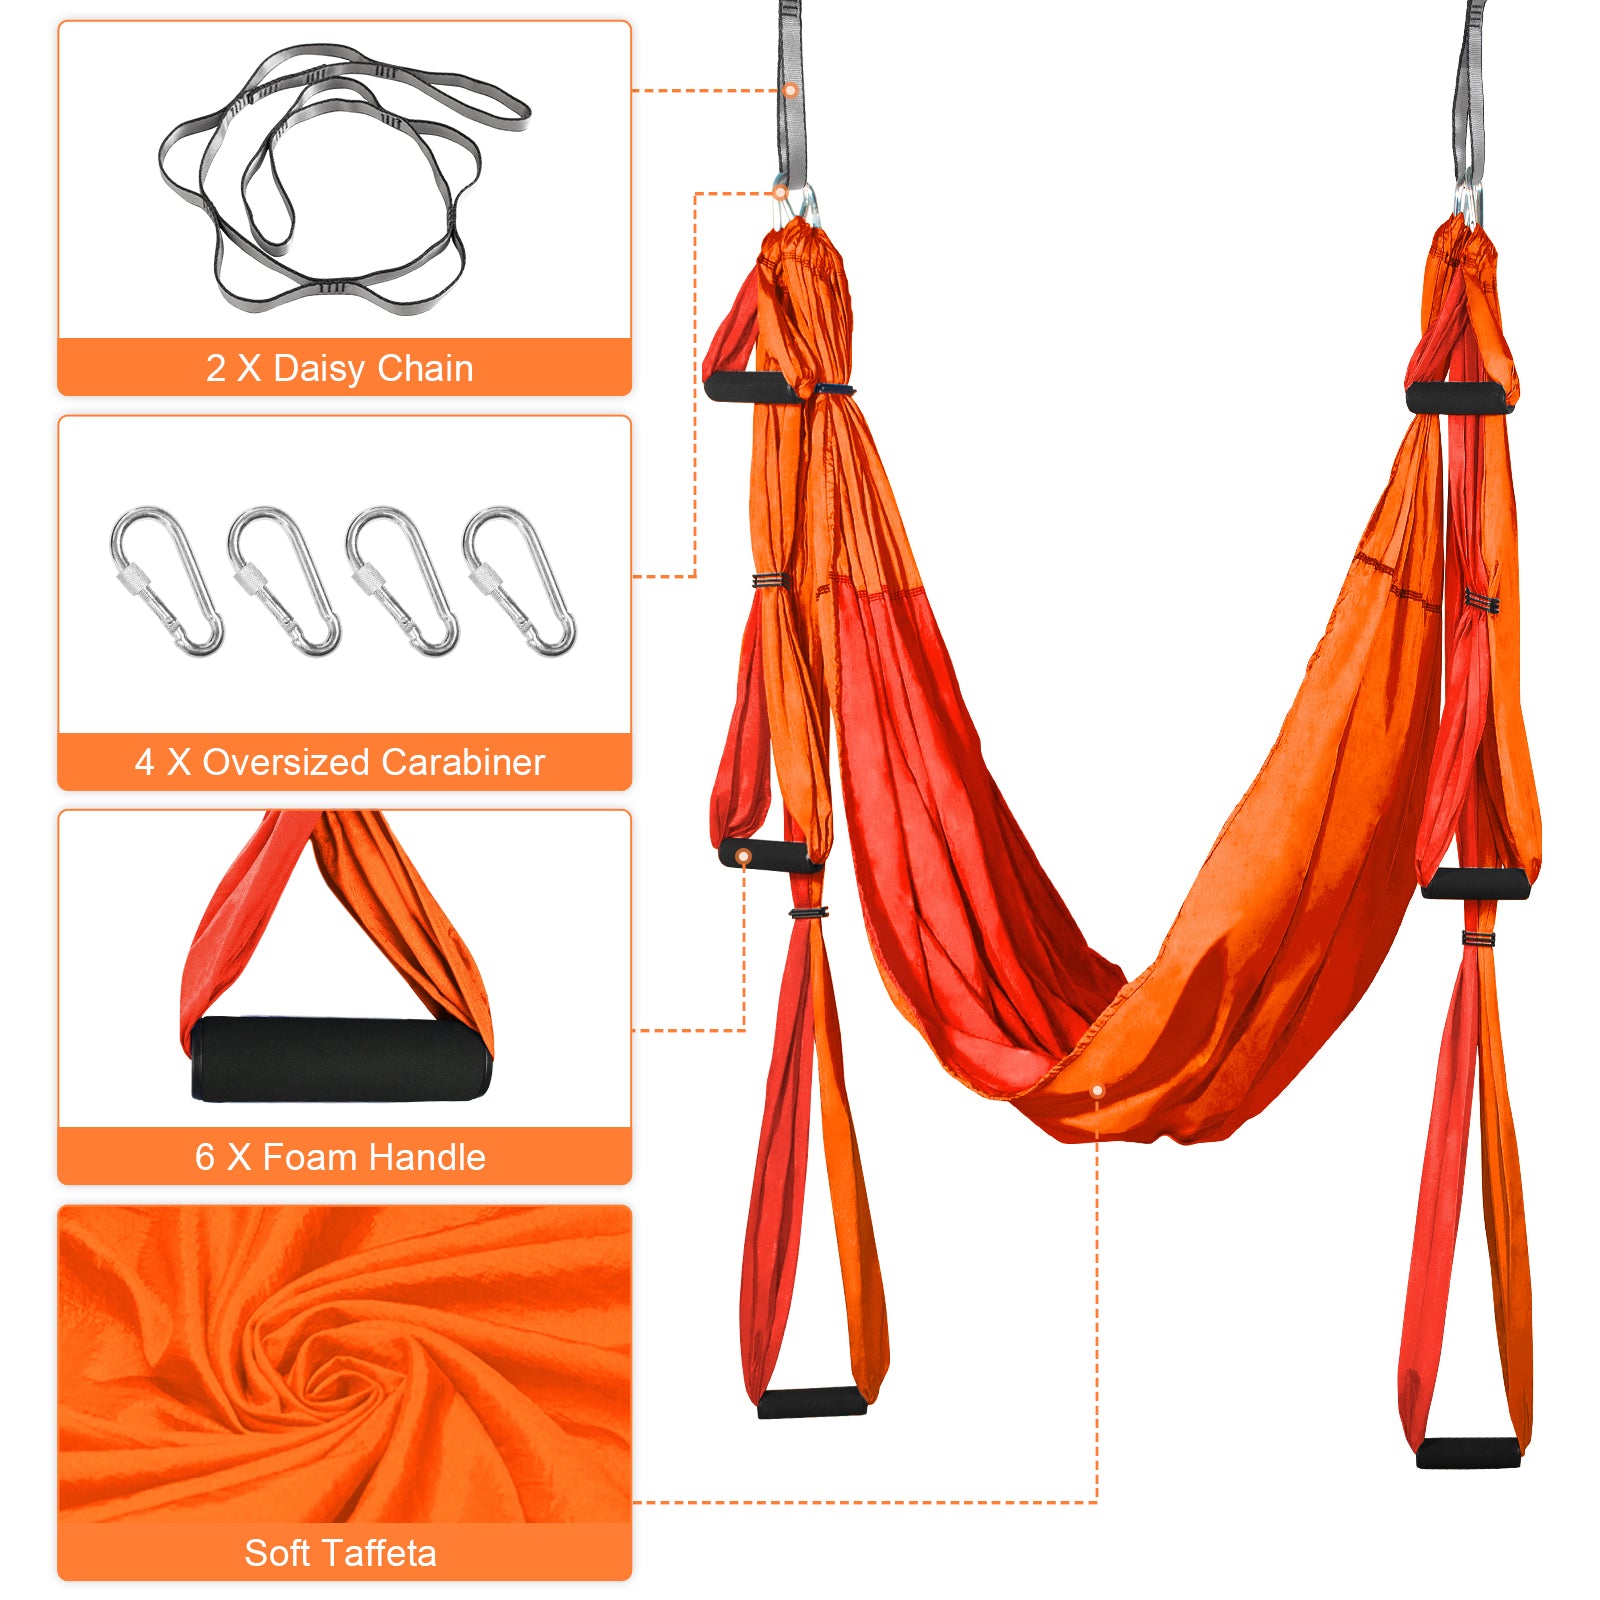 Anti-Gravity-Yoga-Hammock-Swing-with-Garland-Extension-Aerial-Yoga-Hammock-Yoga-Swing-Set-Orange-Red-1-2-Meter-Garland-Size-250-x-150-cm-98-x-59-Inch-Anti-Gravity-Yoga-Hammock-Swing-anti-gravity-yoga-hammock-orange-red